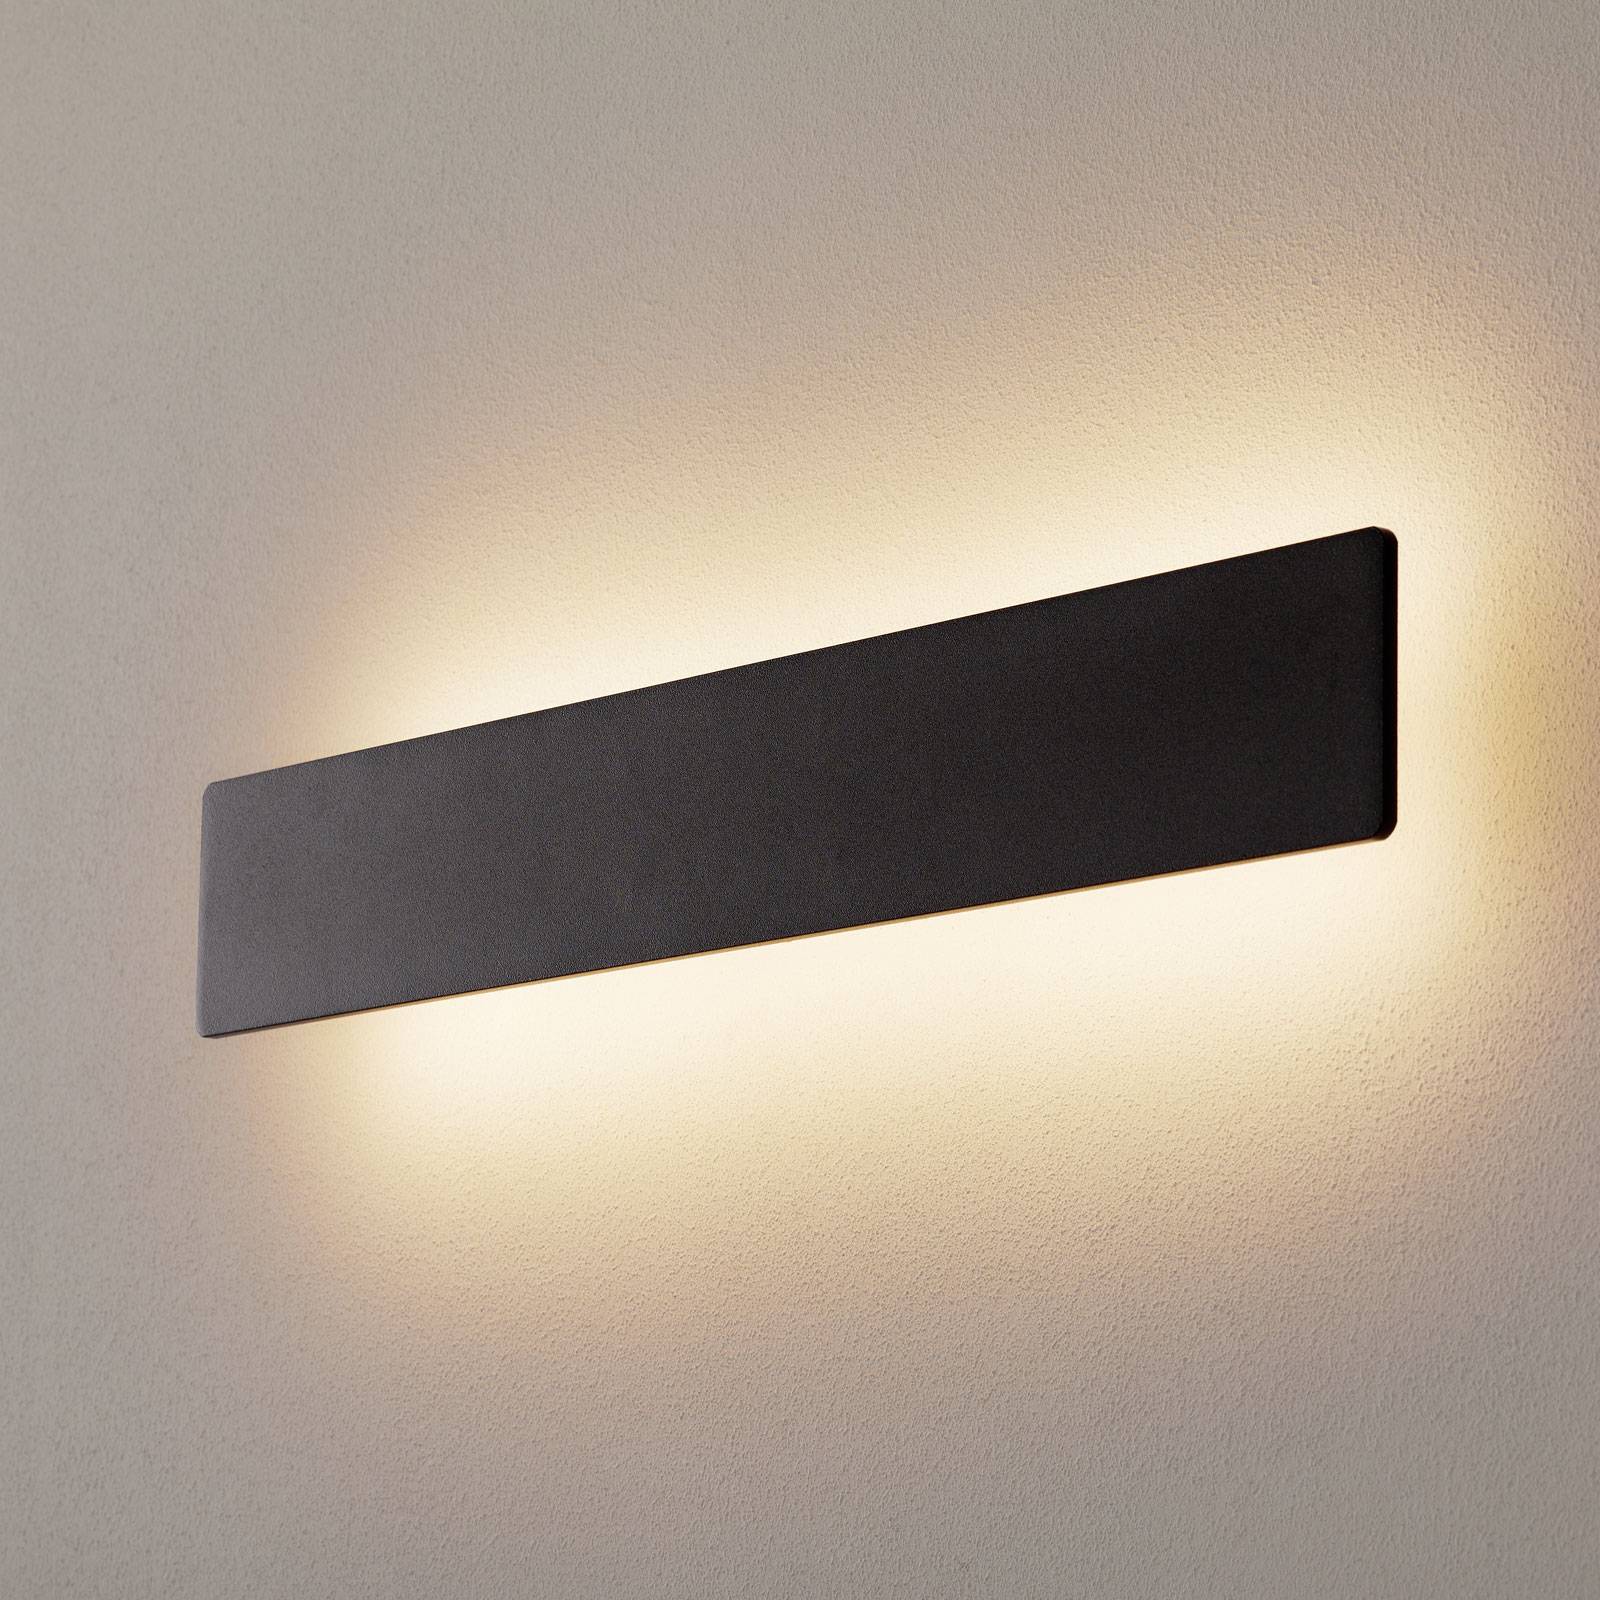 Ideallux LED-Wandleuchte Zig Zag schwarz, Breite 53 cm